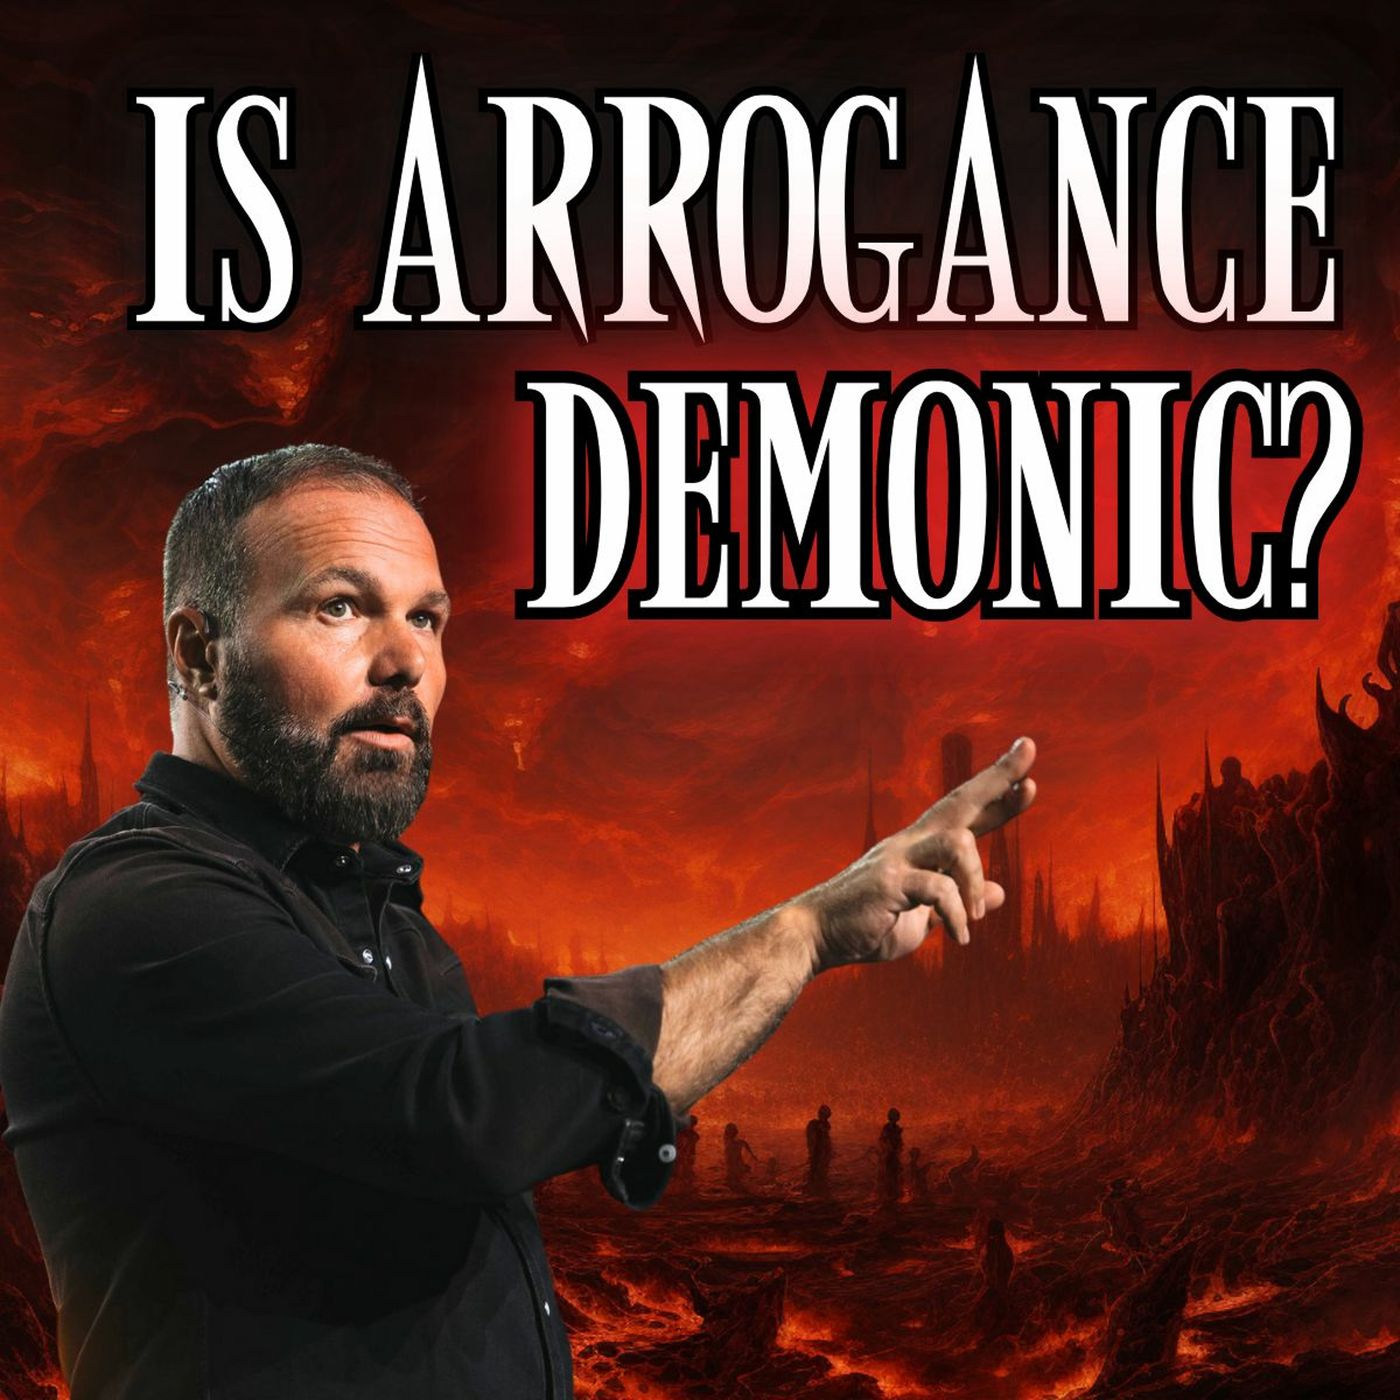 Is arrogance demonic?